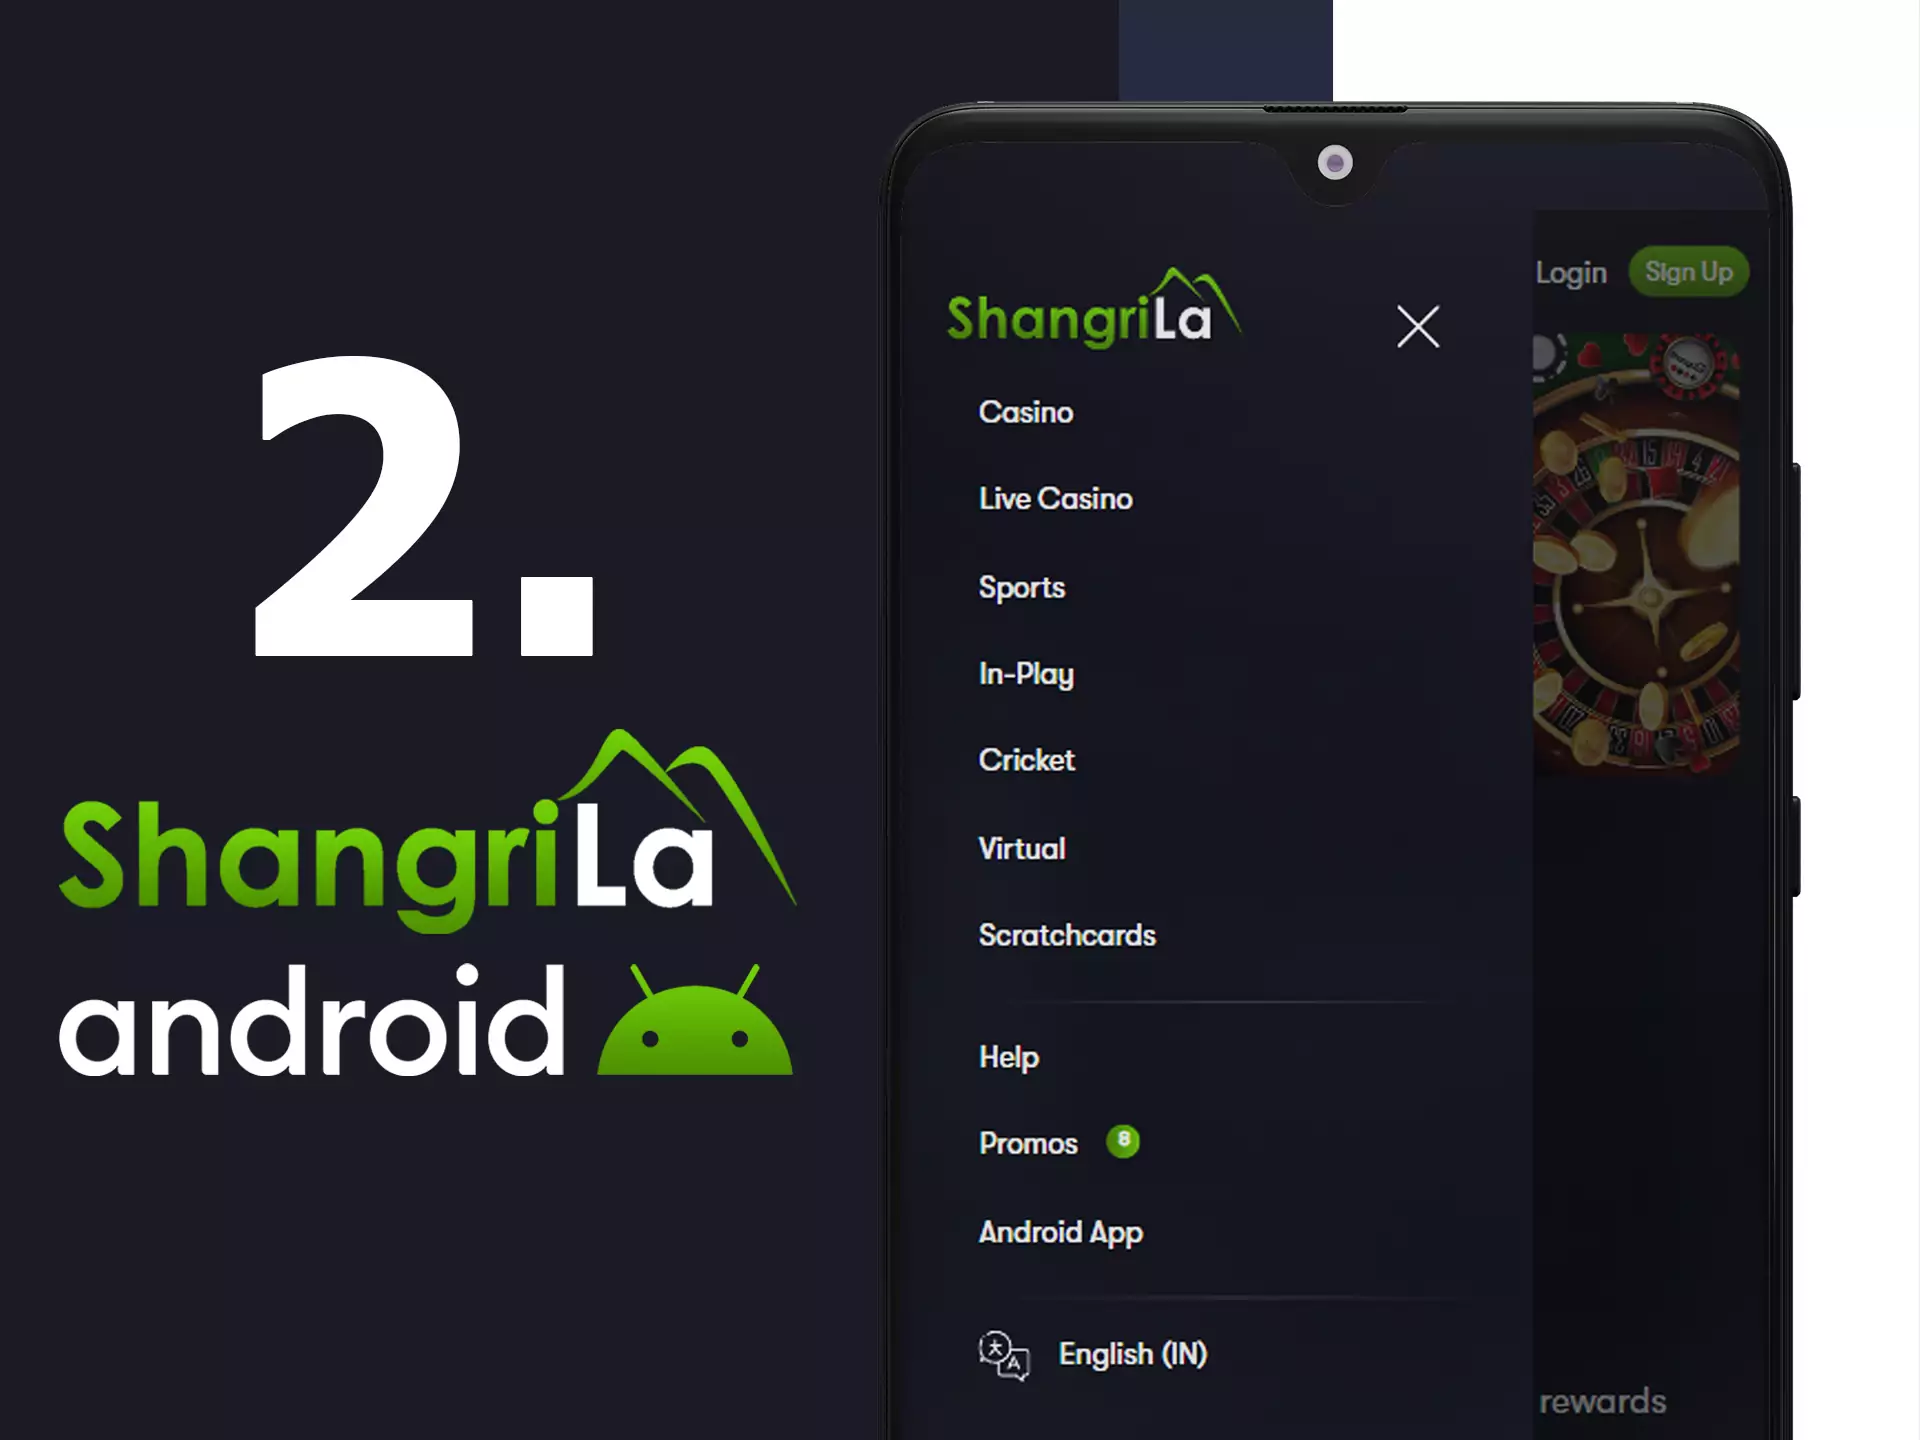 Open the menu of the Shangri La website.